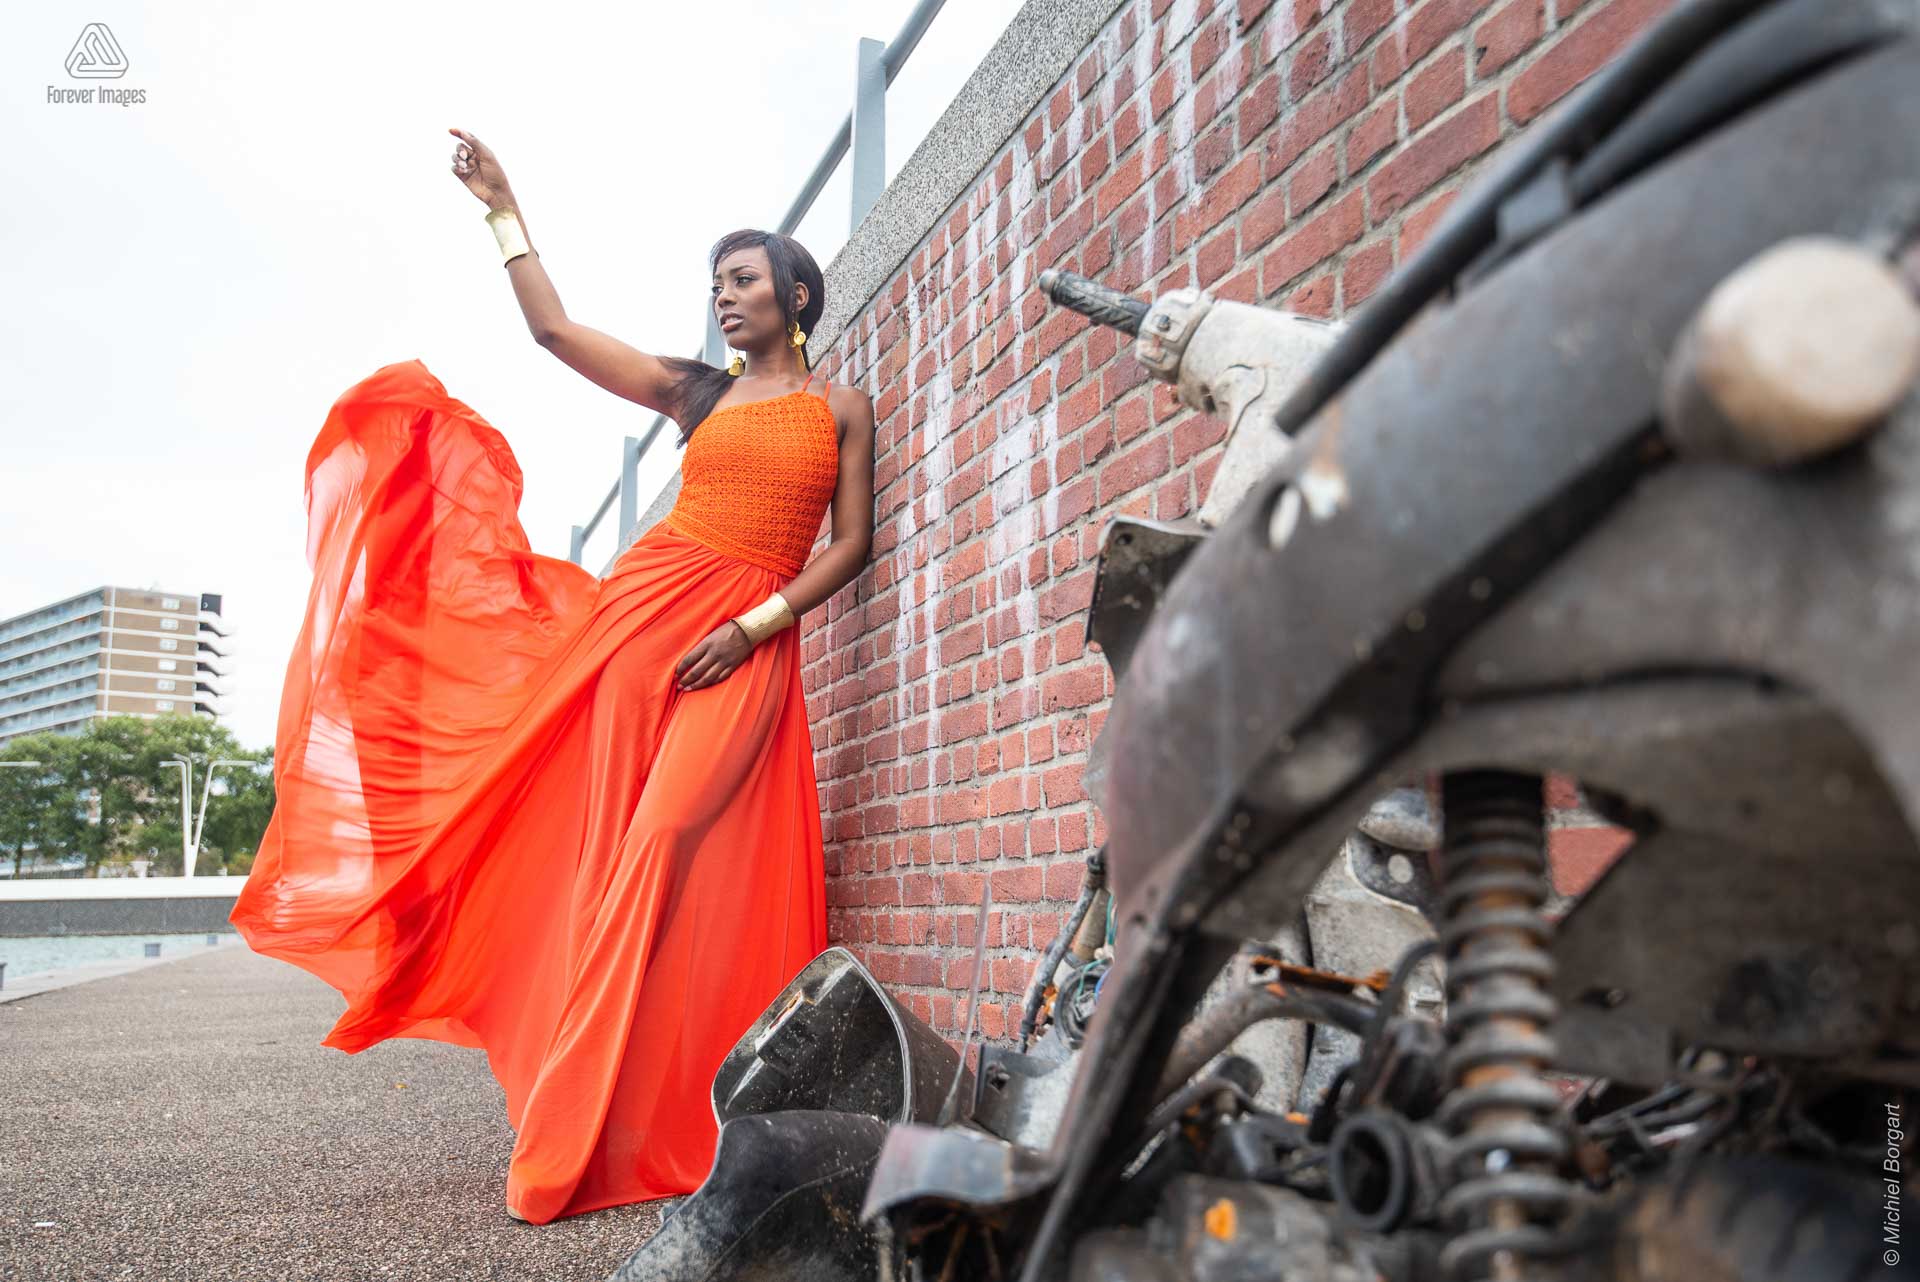 Fashion photo urben shoot orange dress wall Amsterdam | Mariana Pietersz David Cardenas Miss Avantgarde | Fashion Photographer Michiel Borgart - Forever Images.